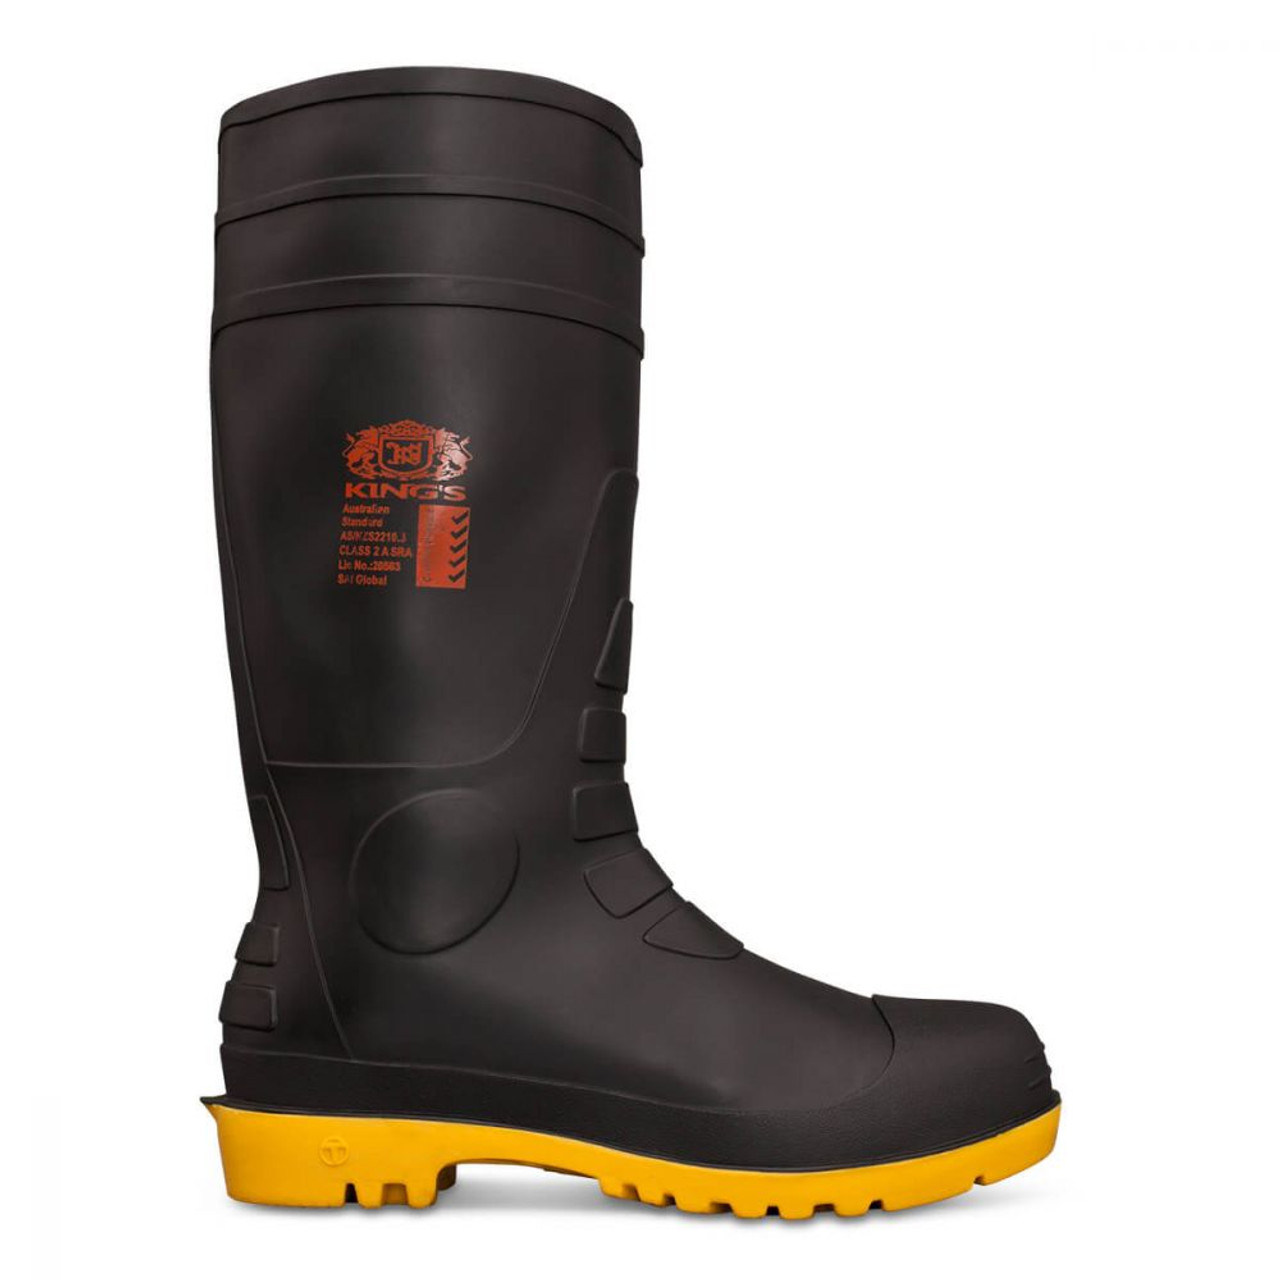 safety boots australian standard